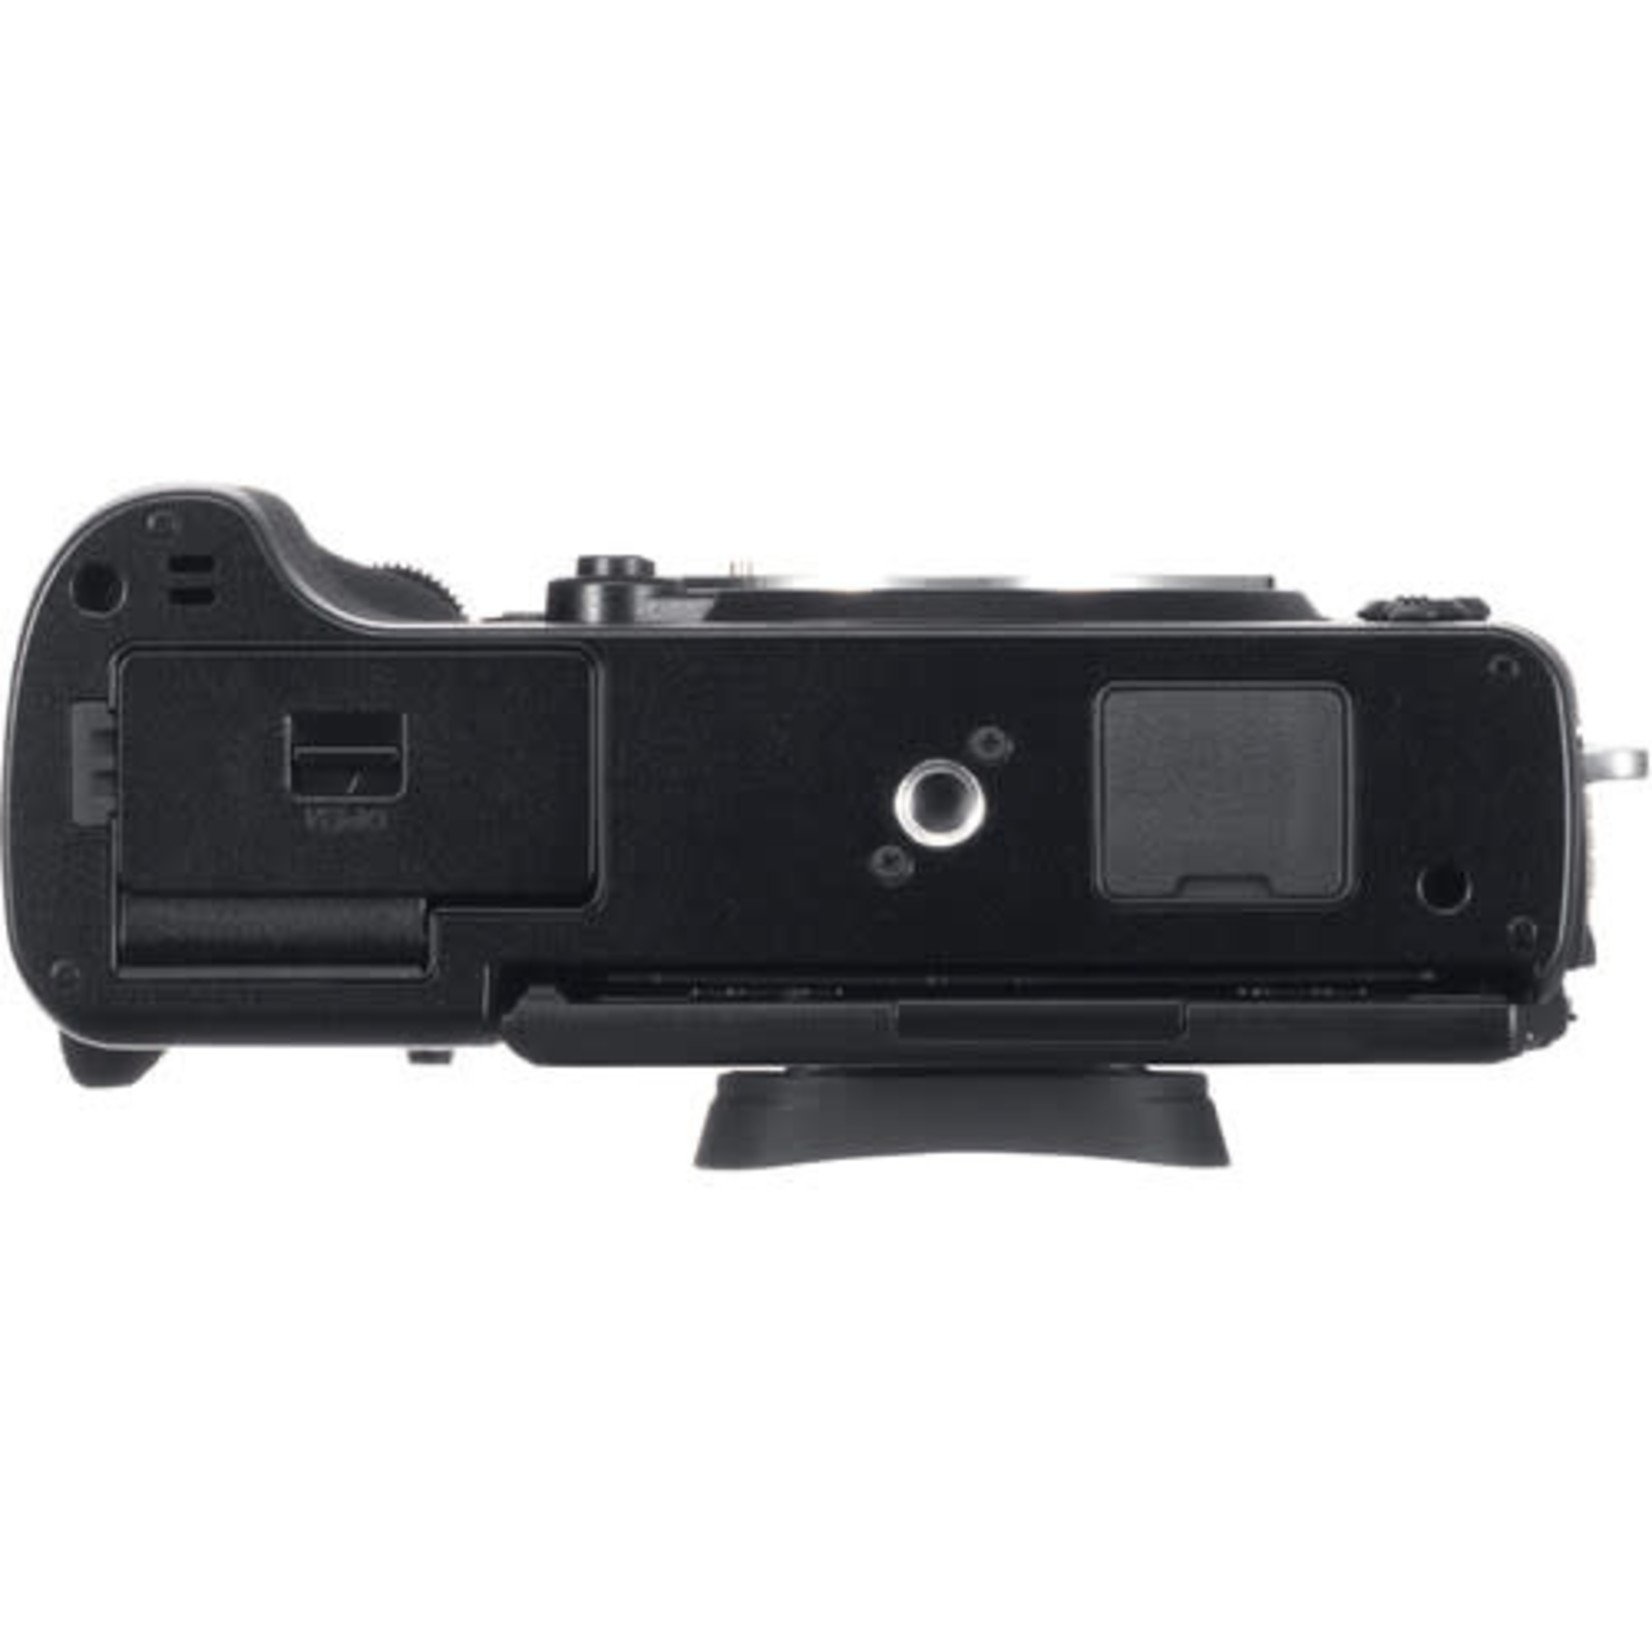 FujiFilm FUJIFILM X-T30 II Mirrorless Camera with 18-55mm Lens (Black)